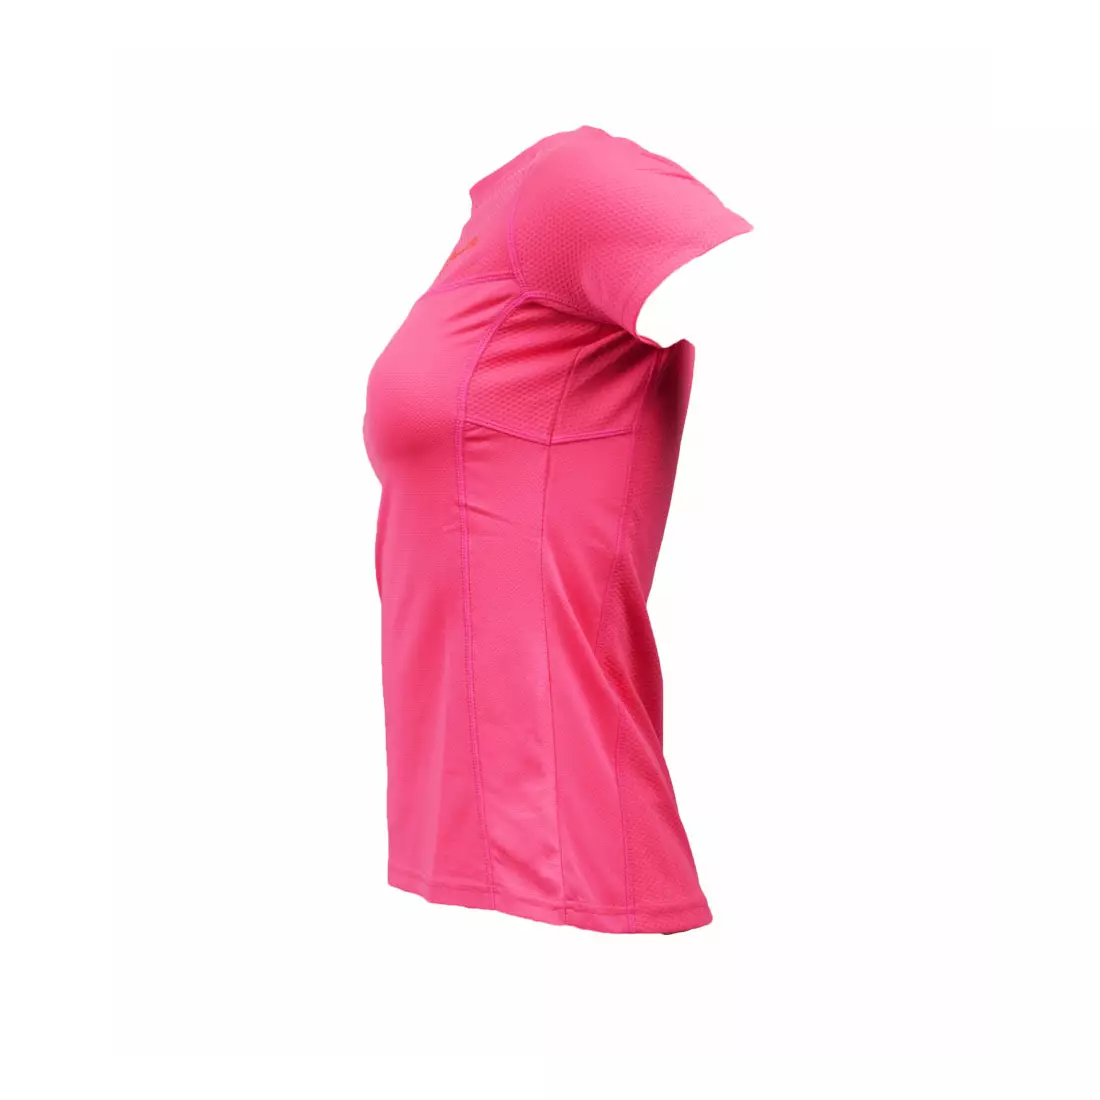 ROGELLI RUN SIRA - tricou pentru alergare dama - culoare: roz fluor